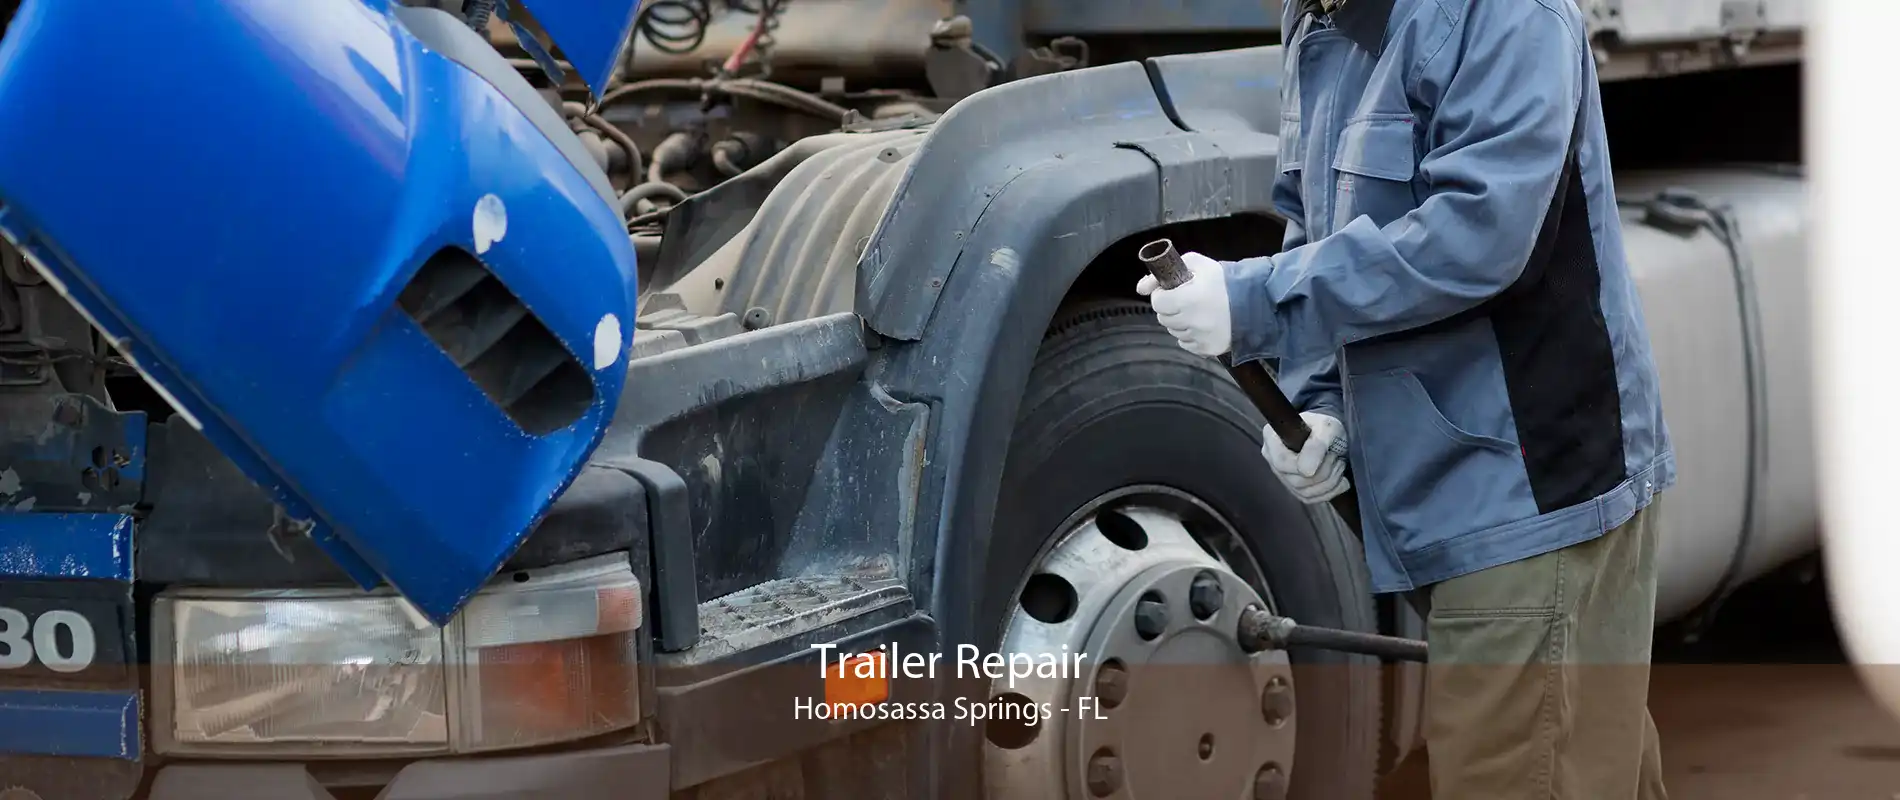 Trailer Repair Homosassa Springs - FL